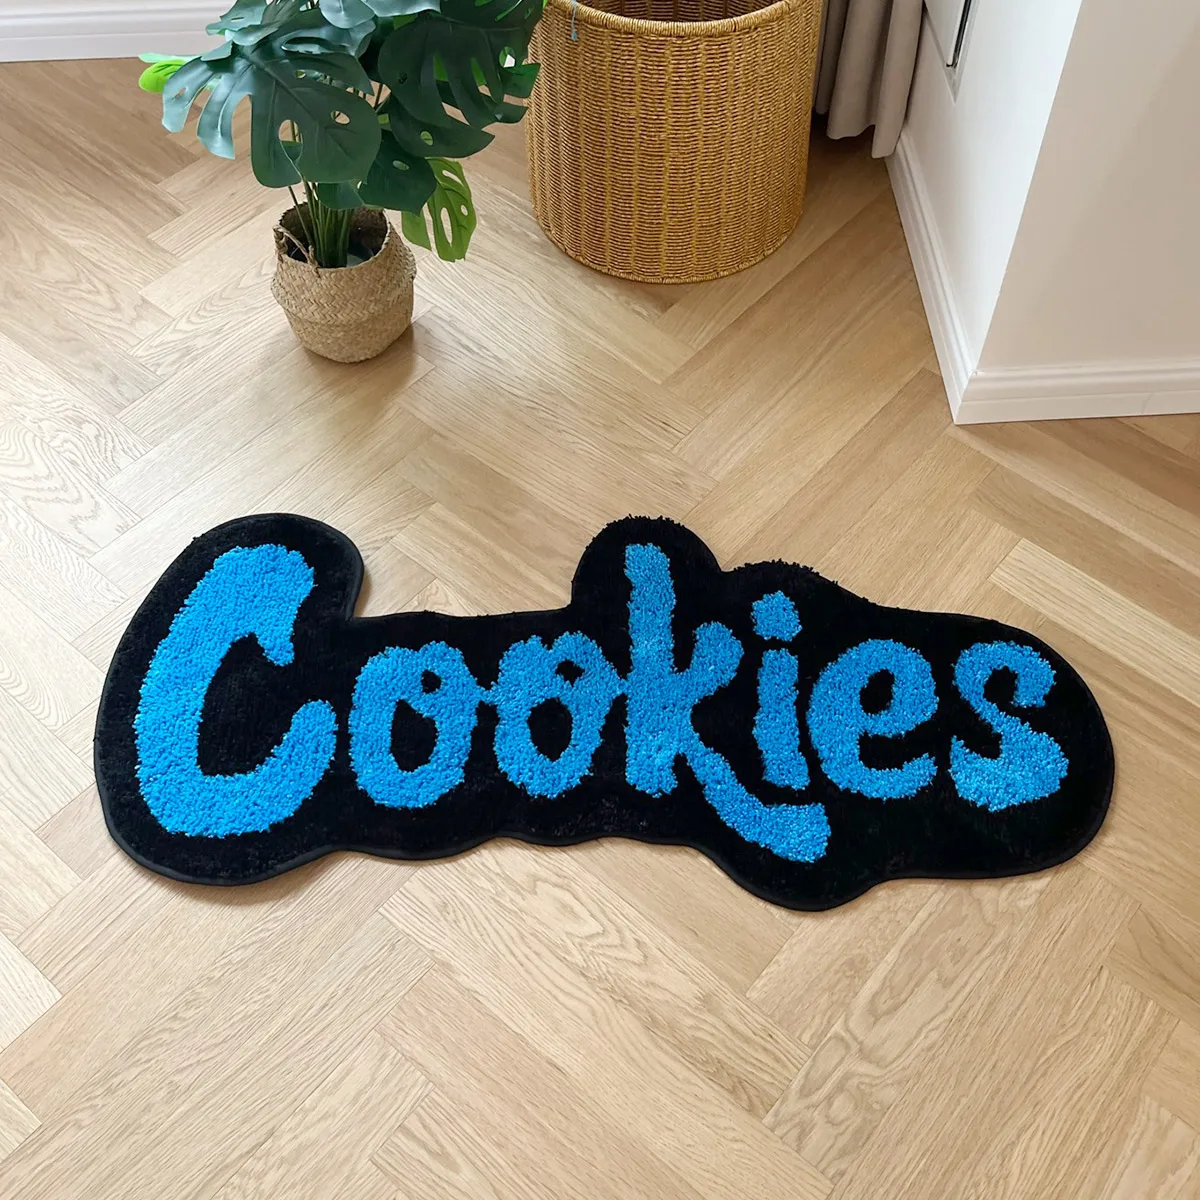 Handmade Cookies Rug for Kids Room Tufted Carpet Mat Soft Plush Children Gift Room Decoration